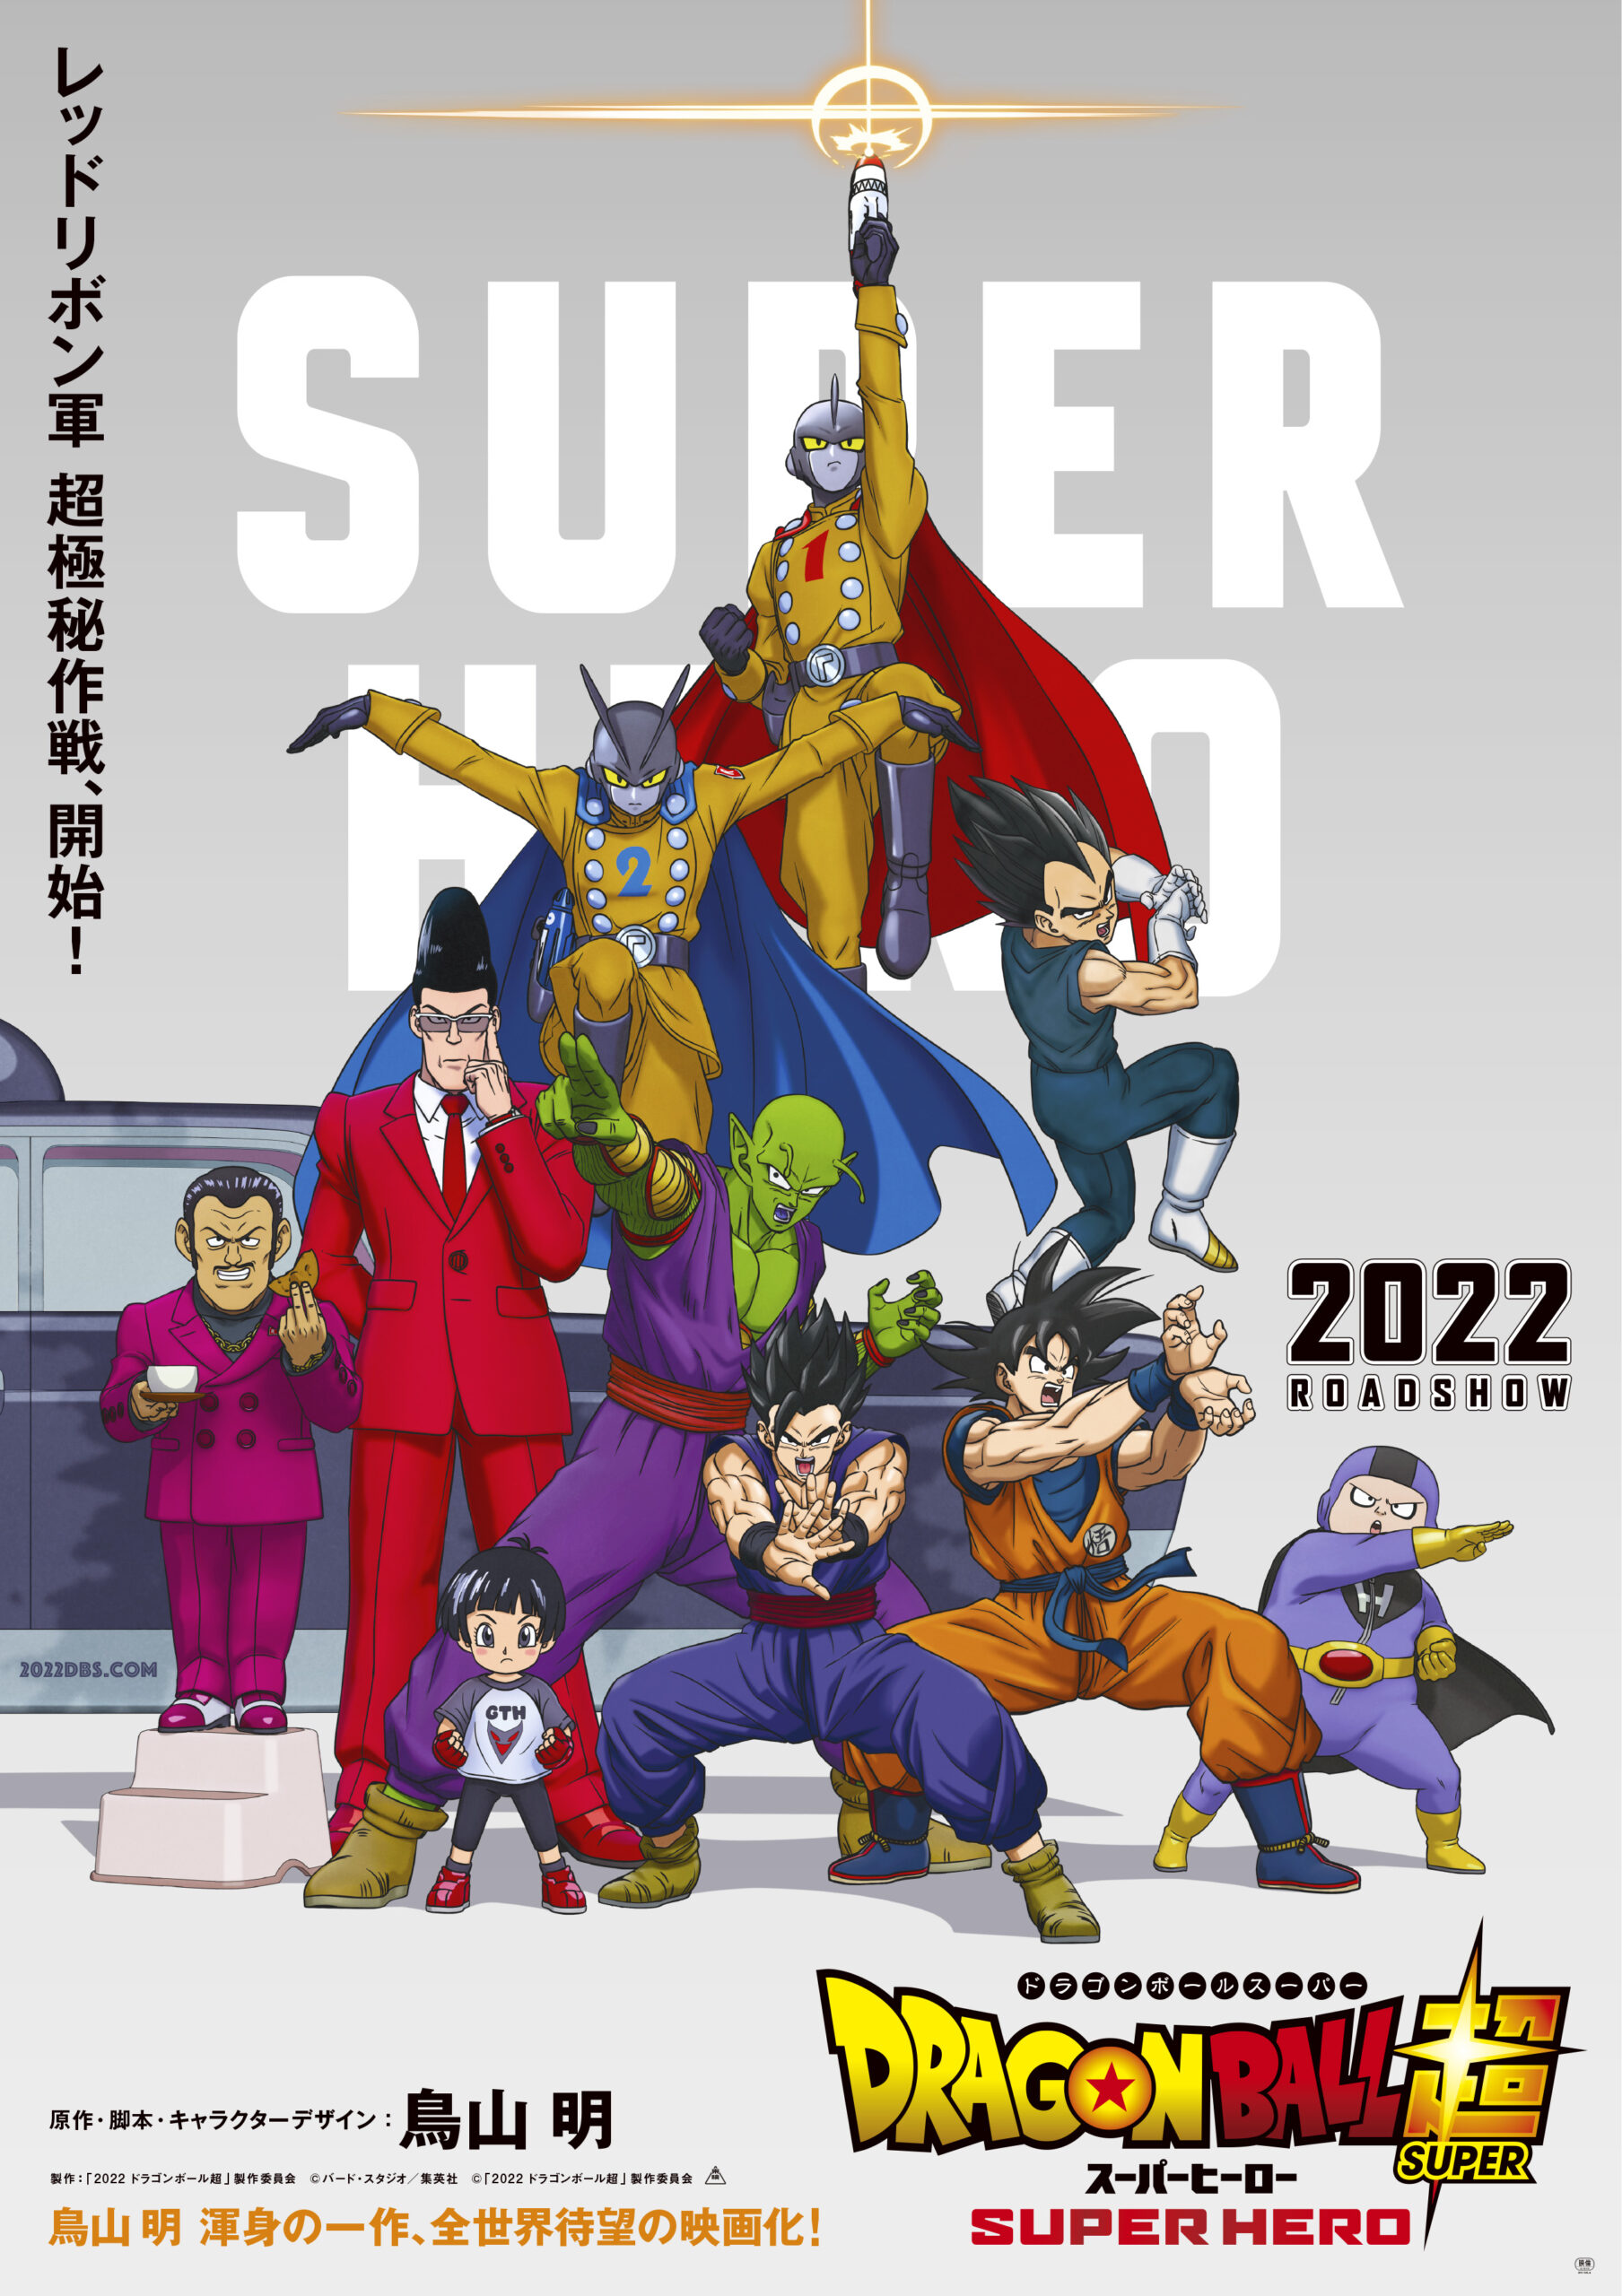 Dragon Ball Super: Super Hero U.S. Release Date Spotted